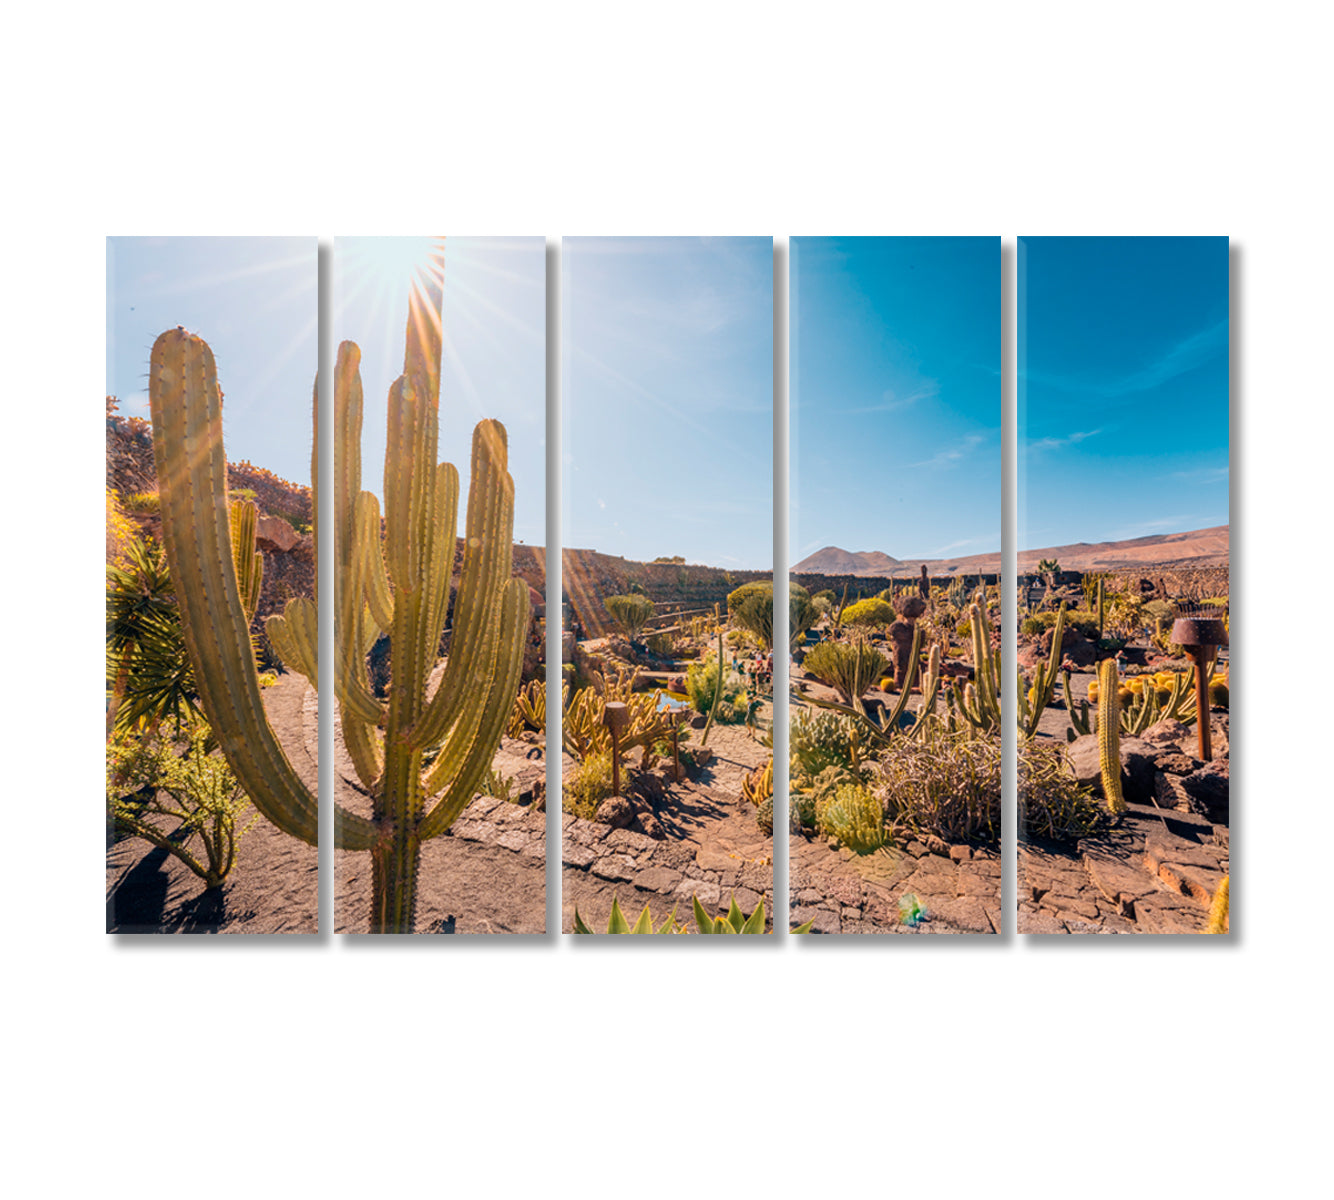 Cactus Garden Lanzarote Canary Islands Spain Canvas Print-Canvas Print-CetArt-5 Panels-36x24 inches-CetArt